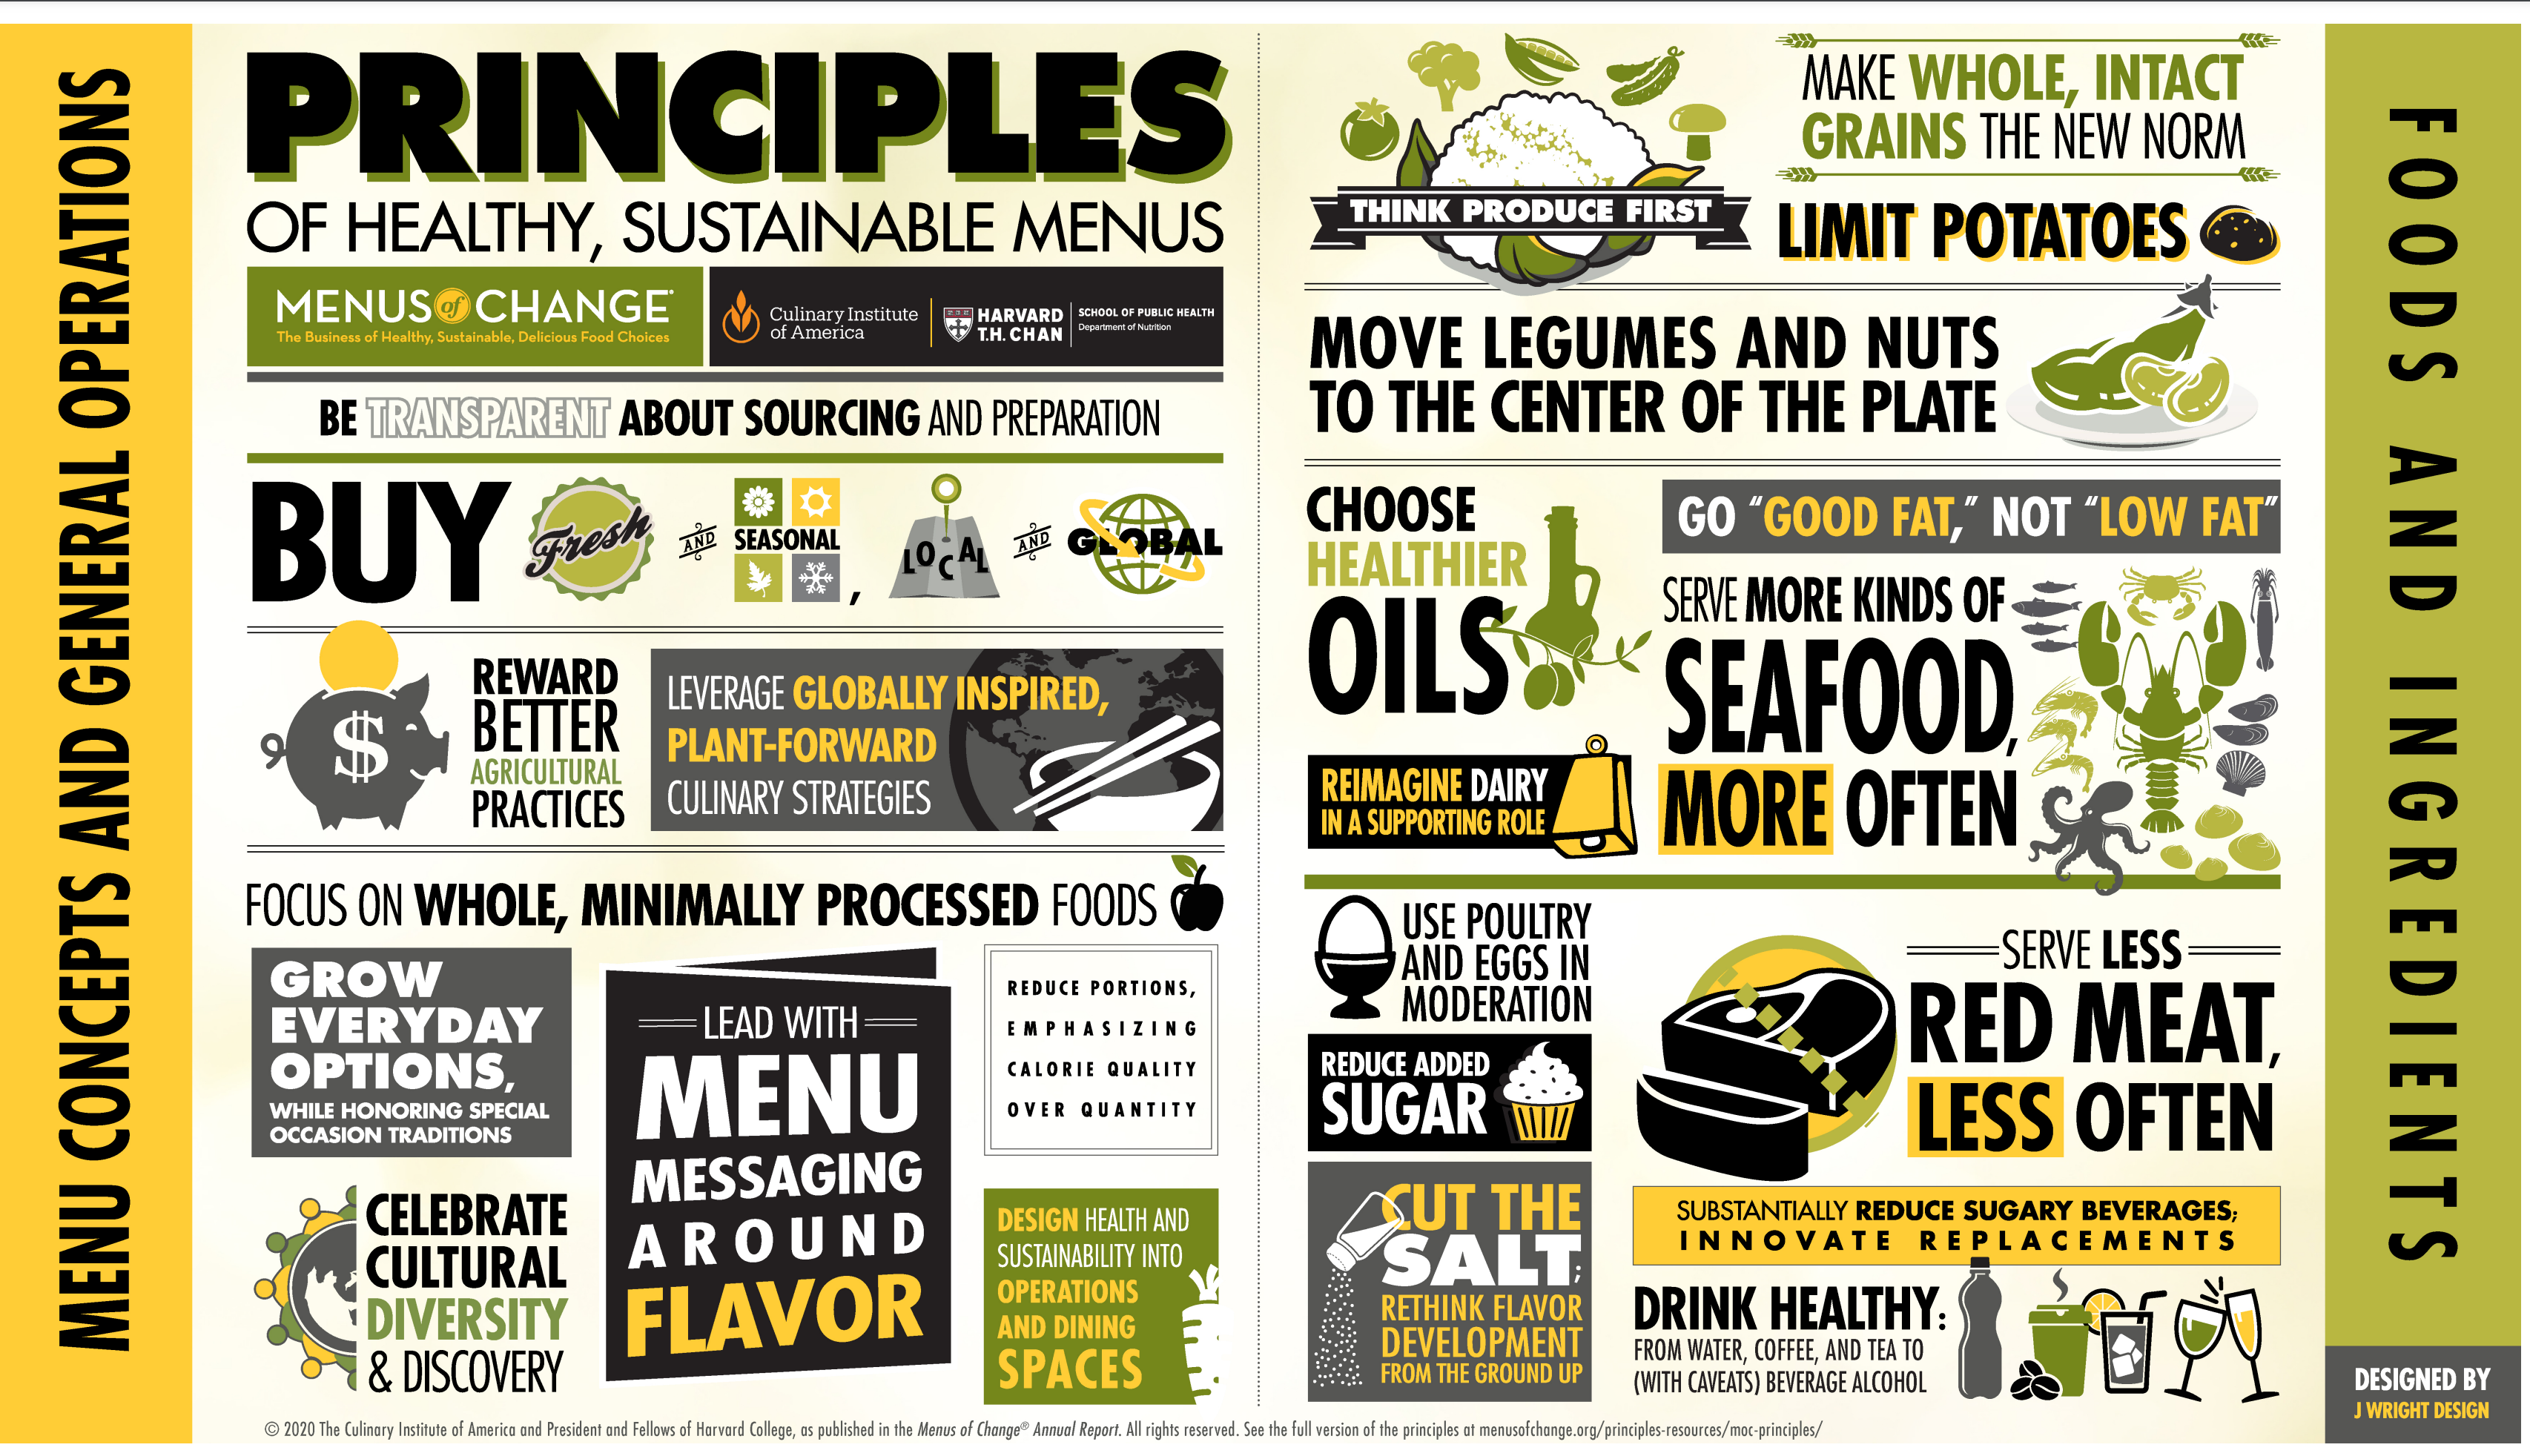 Principles of healthy, sustainable menus